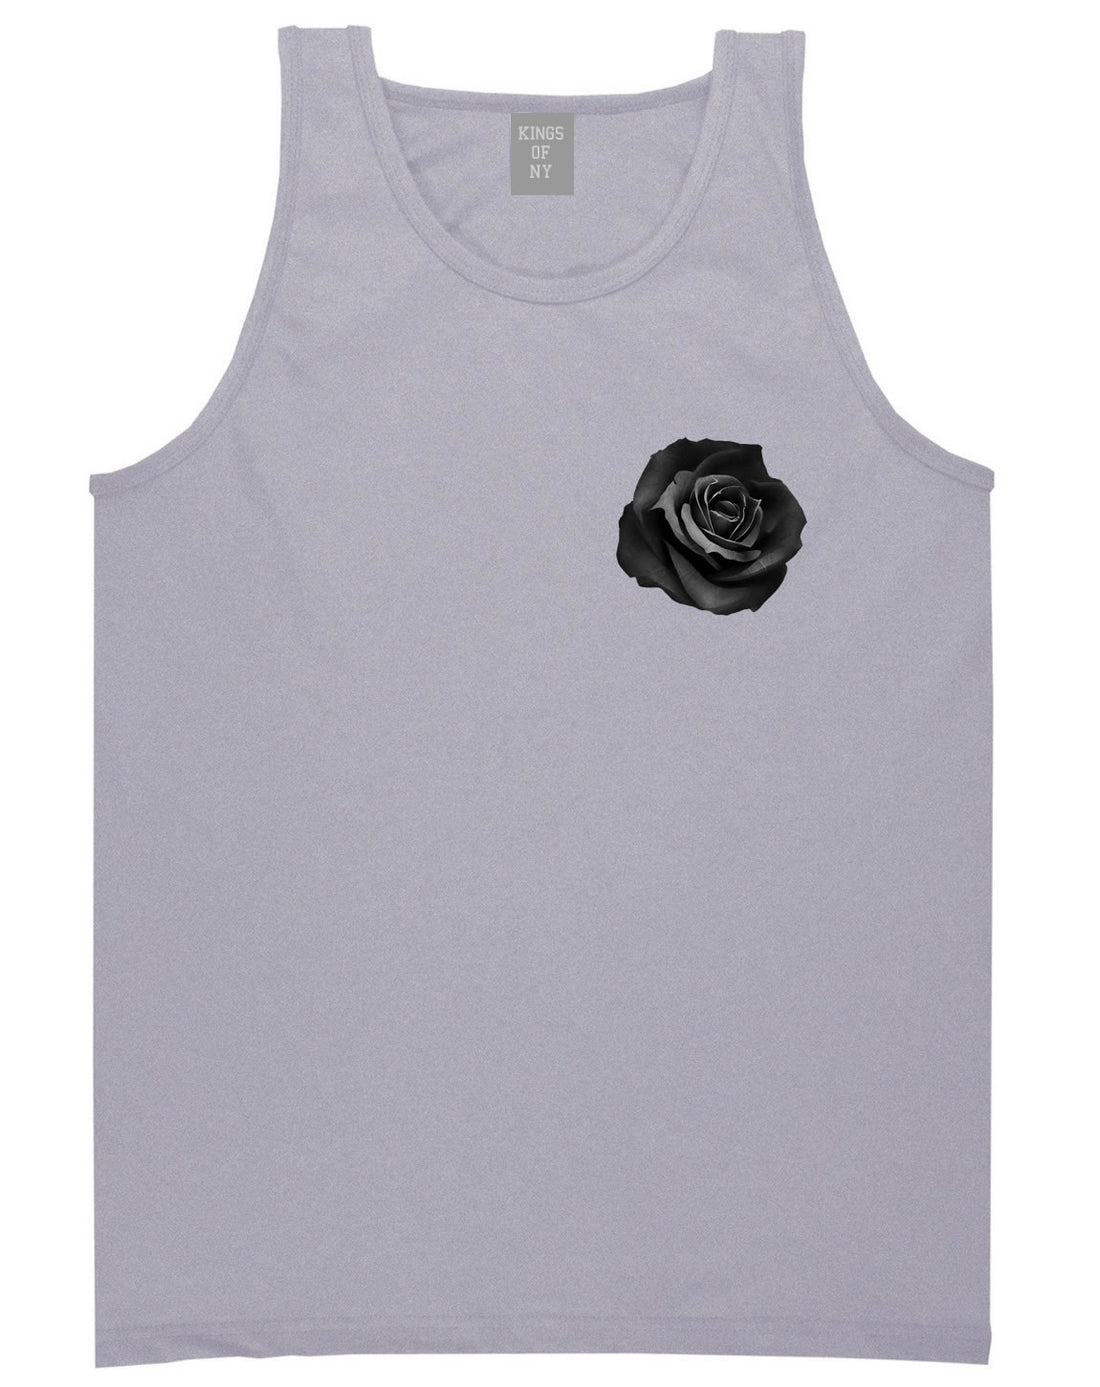 Black Noir Rose Flower Chest Logo Tank Top in Grey By Kings Of NY